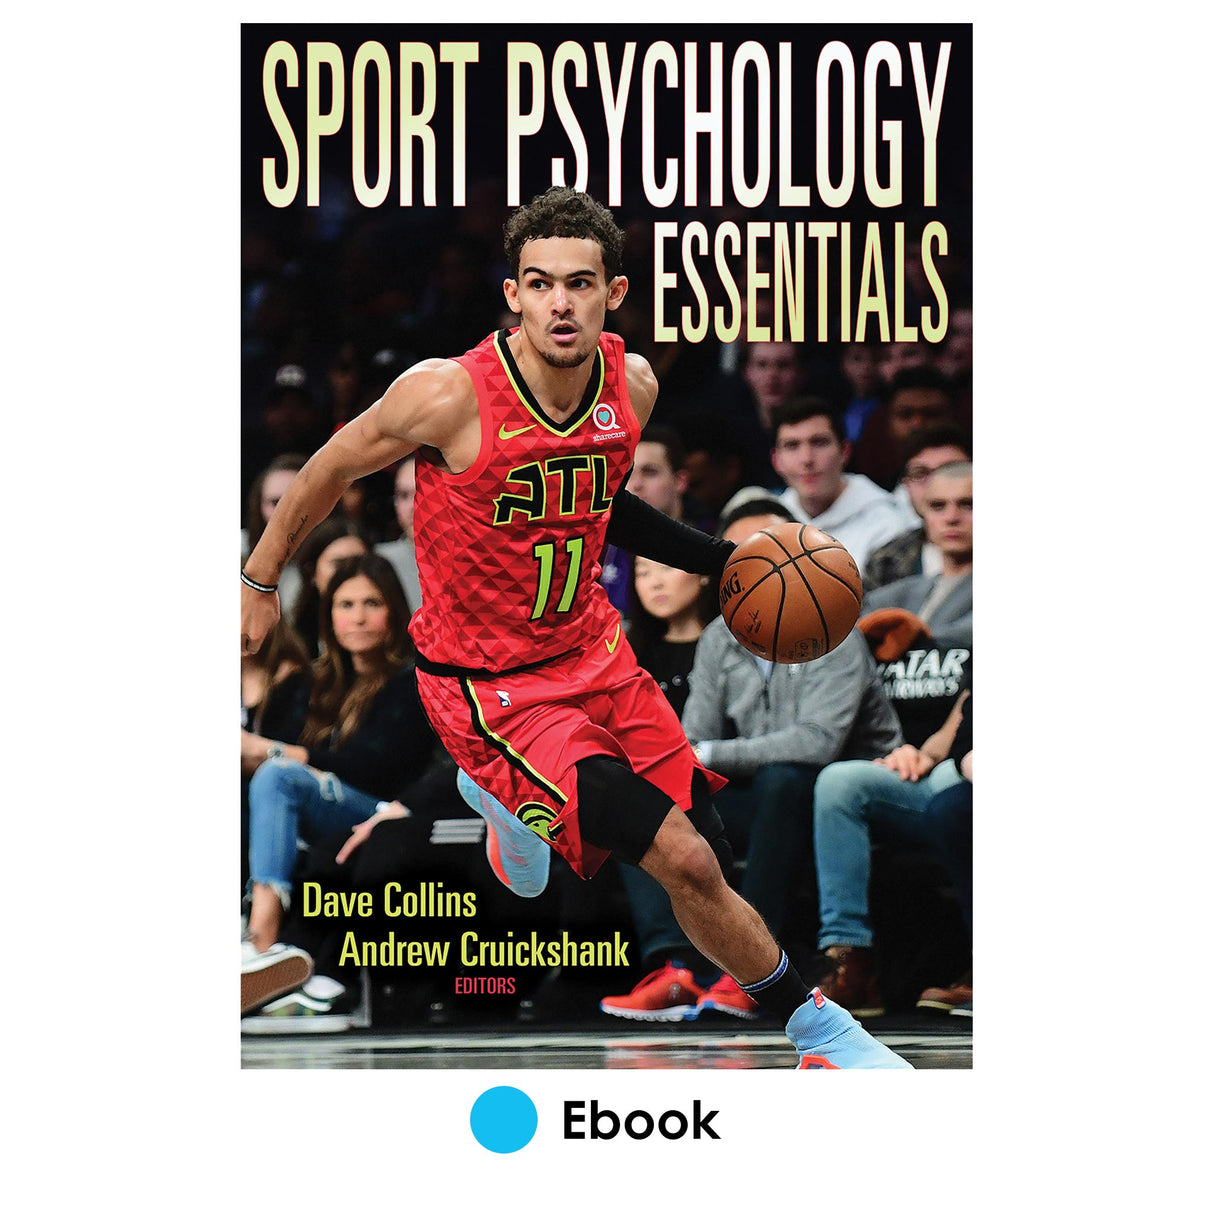 Sport Psychology Essentials epub